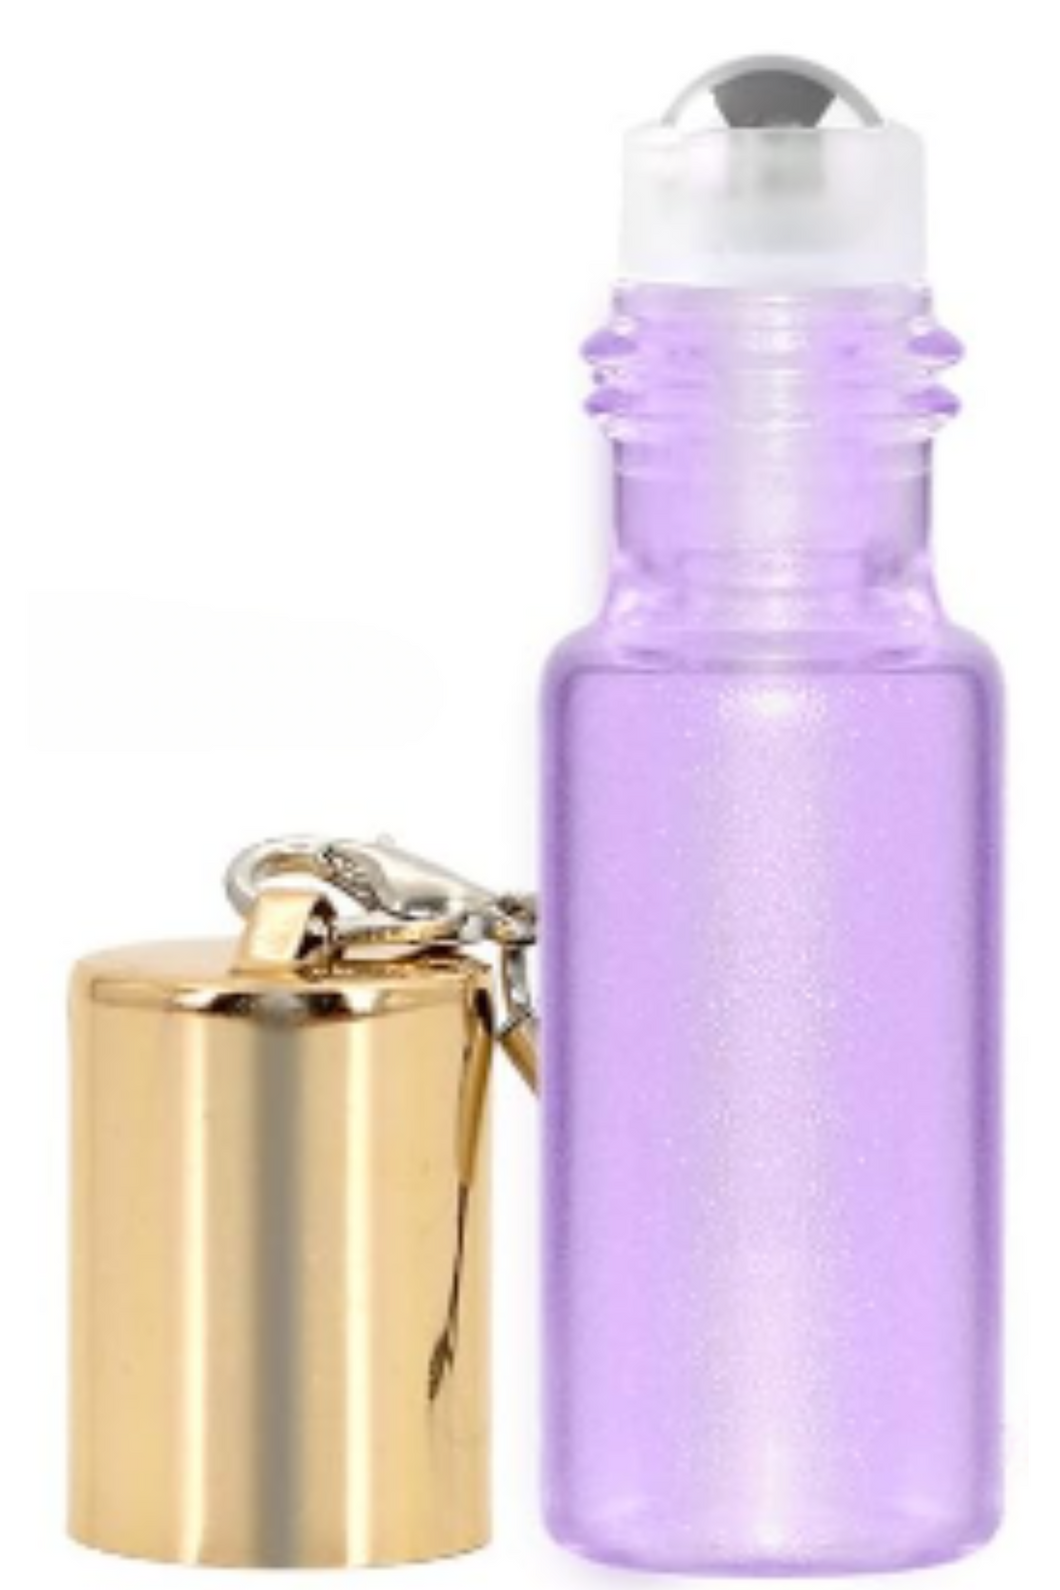 Travel perfume rollers - 5ml